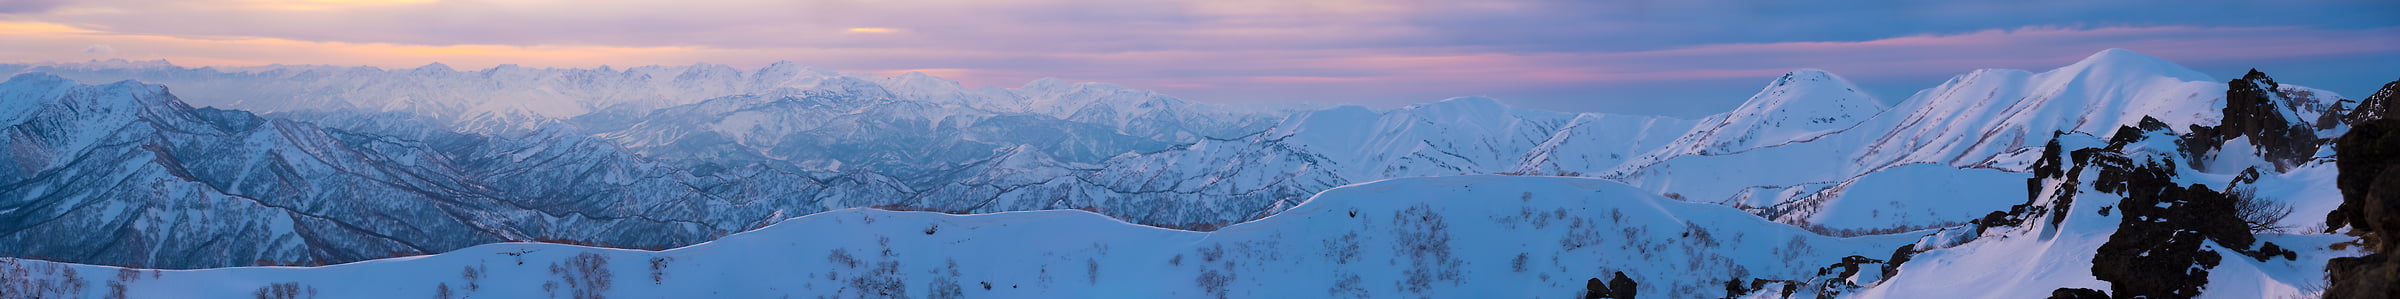 253 megapixels! A very high resolution, large-format VAST photo print of mountains in Myoko Kogen Ski Resort, Japan; fine art landscape photo created by Scott Rinckenberger.